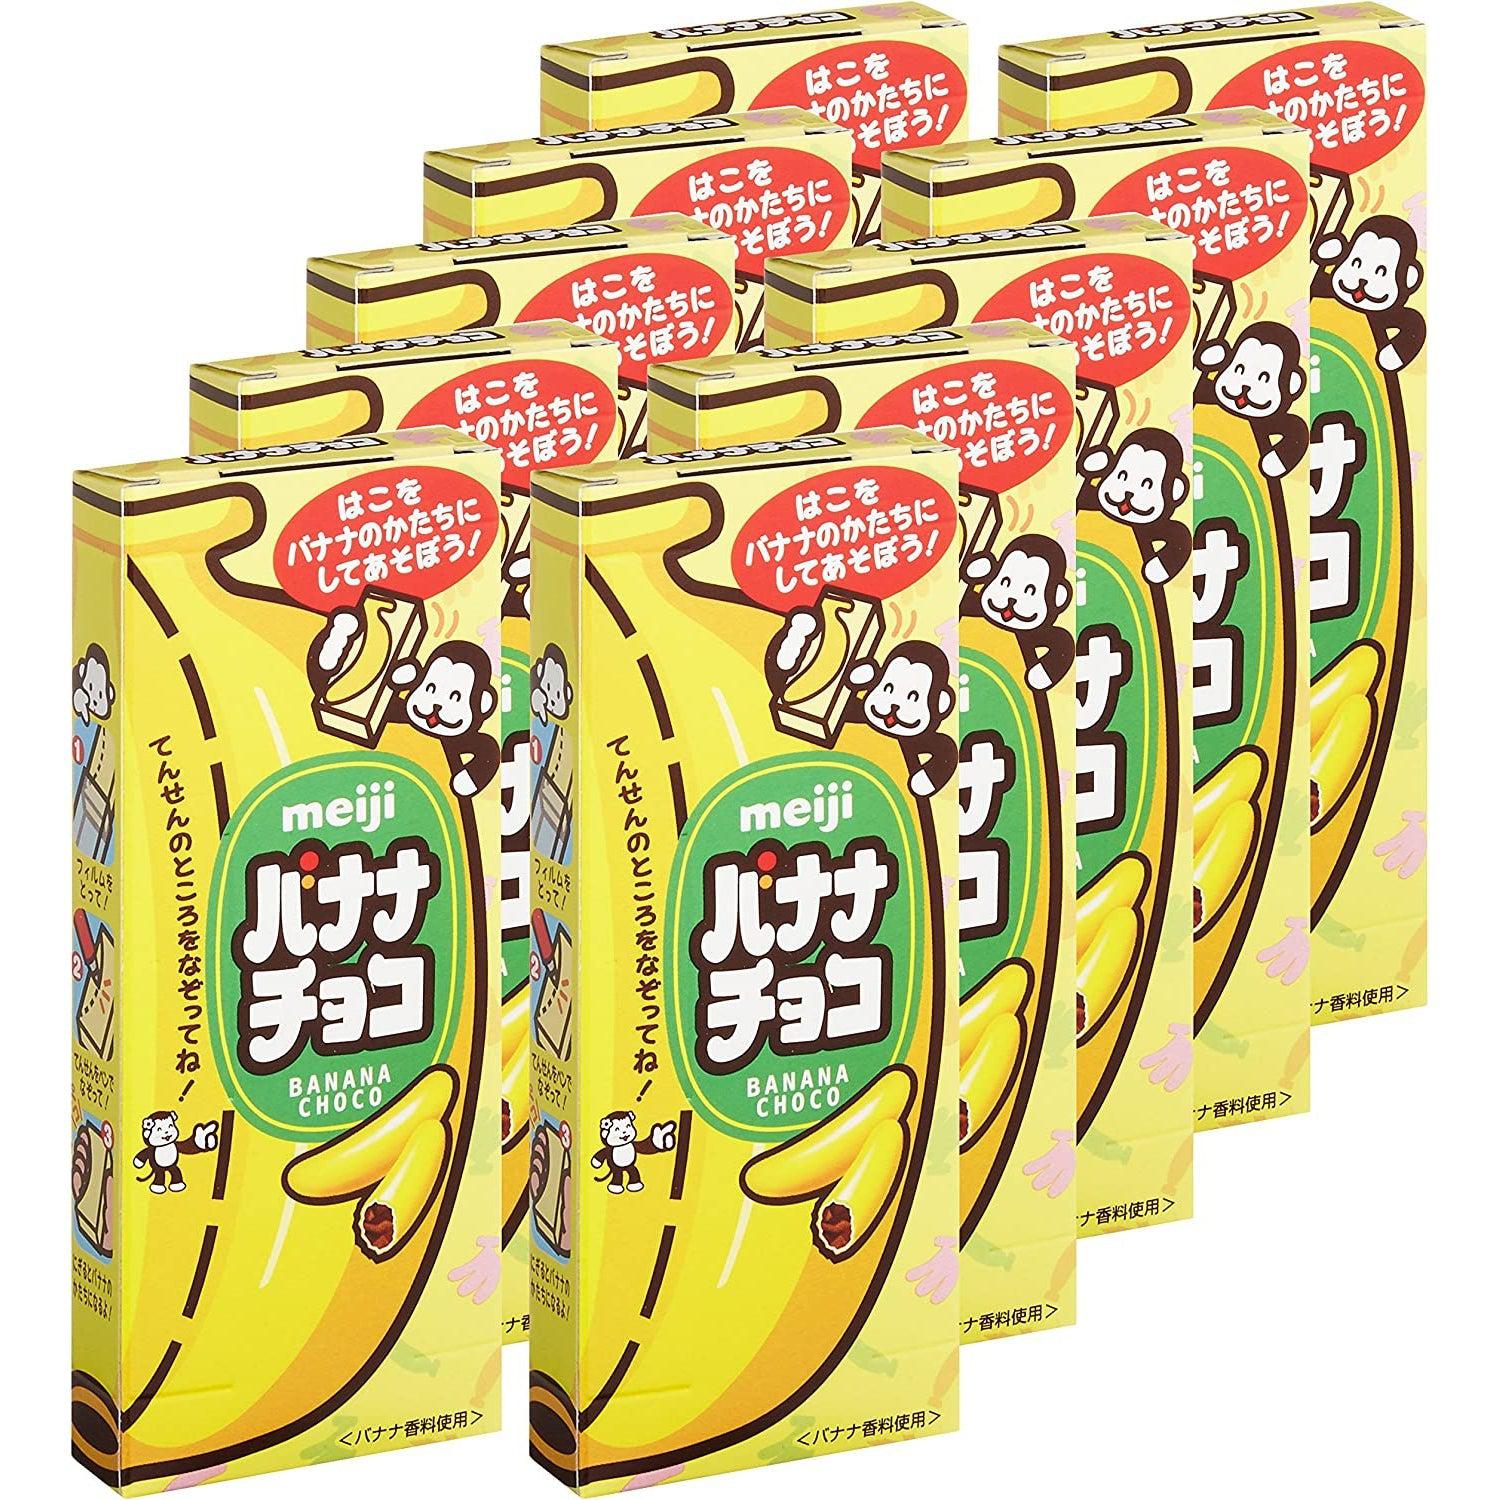 Meiji Banana Choco Banana Flavor Chocolate Snack 37g (Pack of 10)